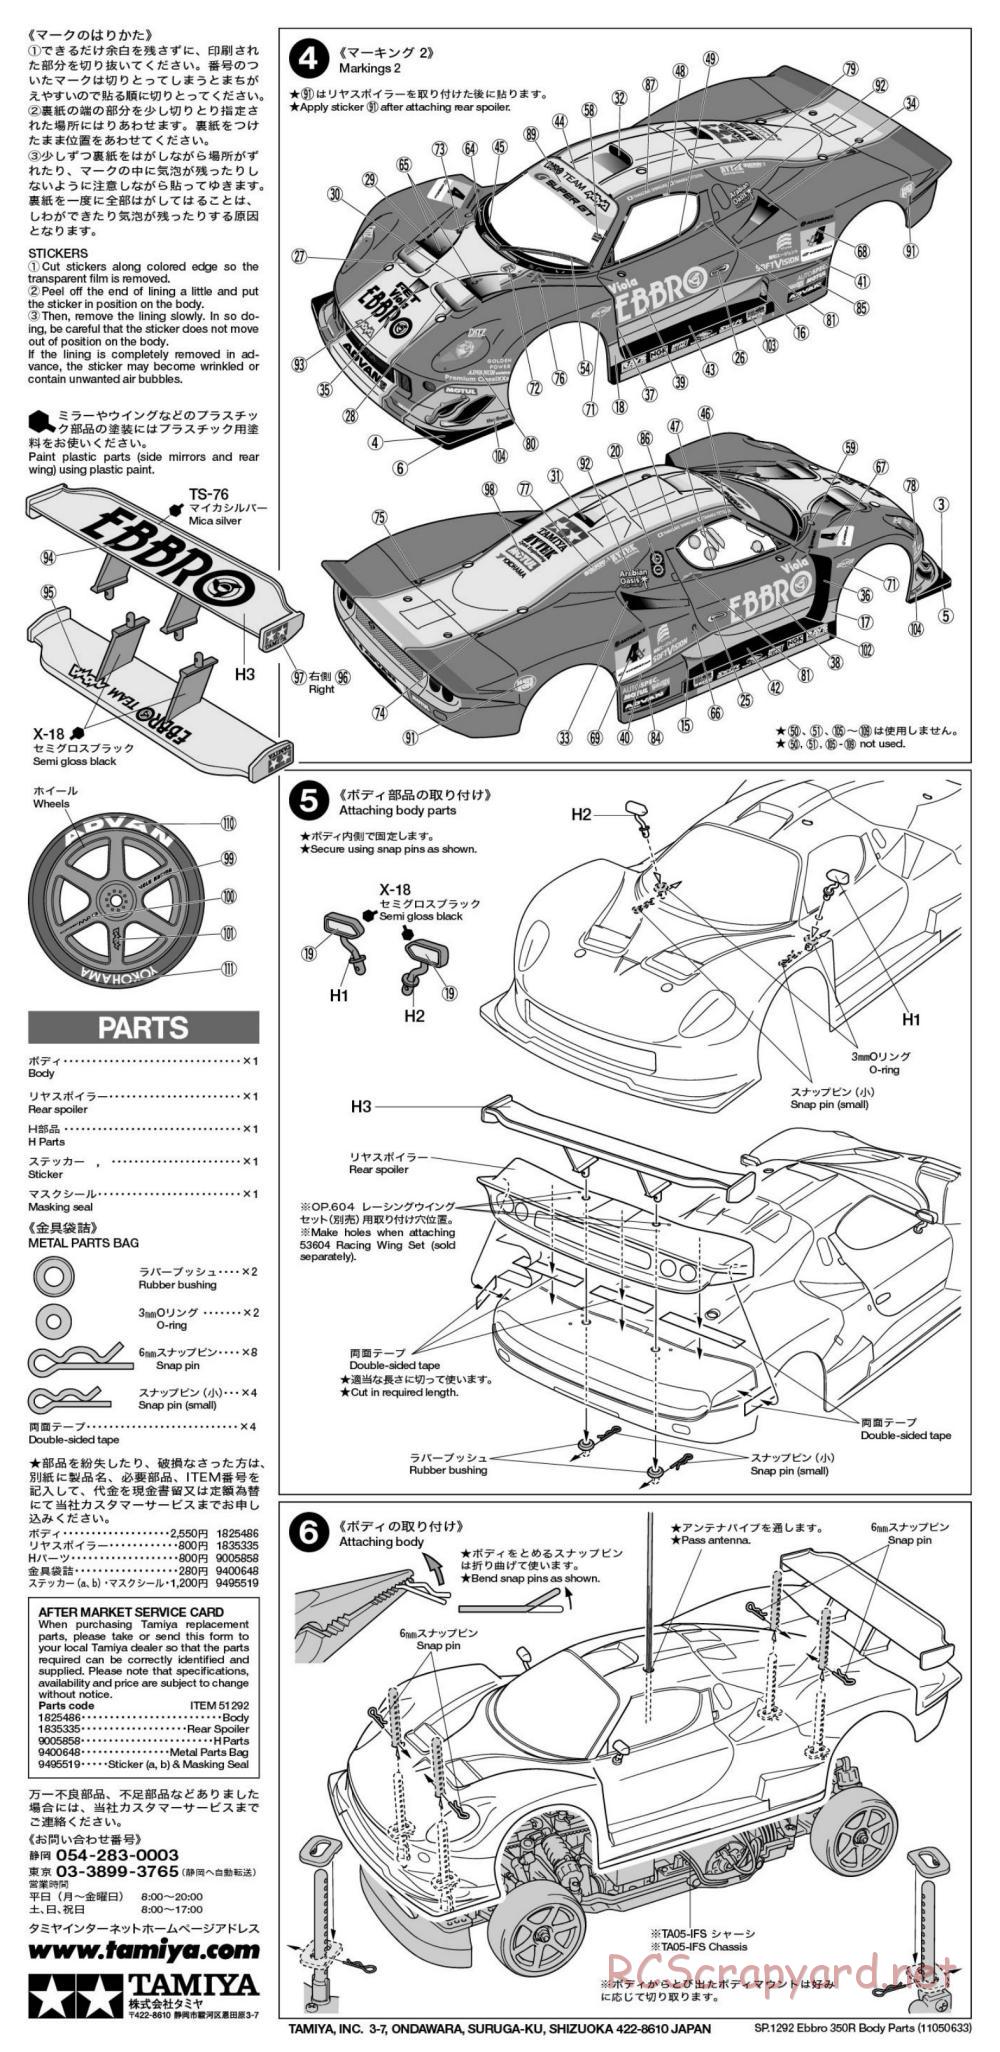 Tamiya - EBBRO 350R - TA05-IFS Chassis - Body Manual - Page 2